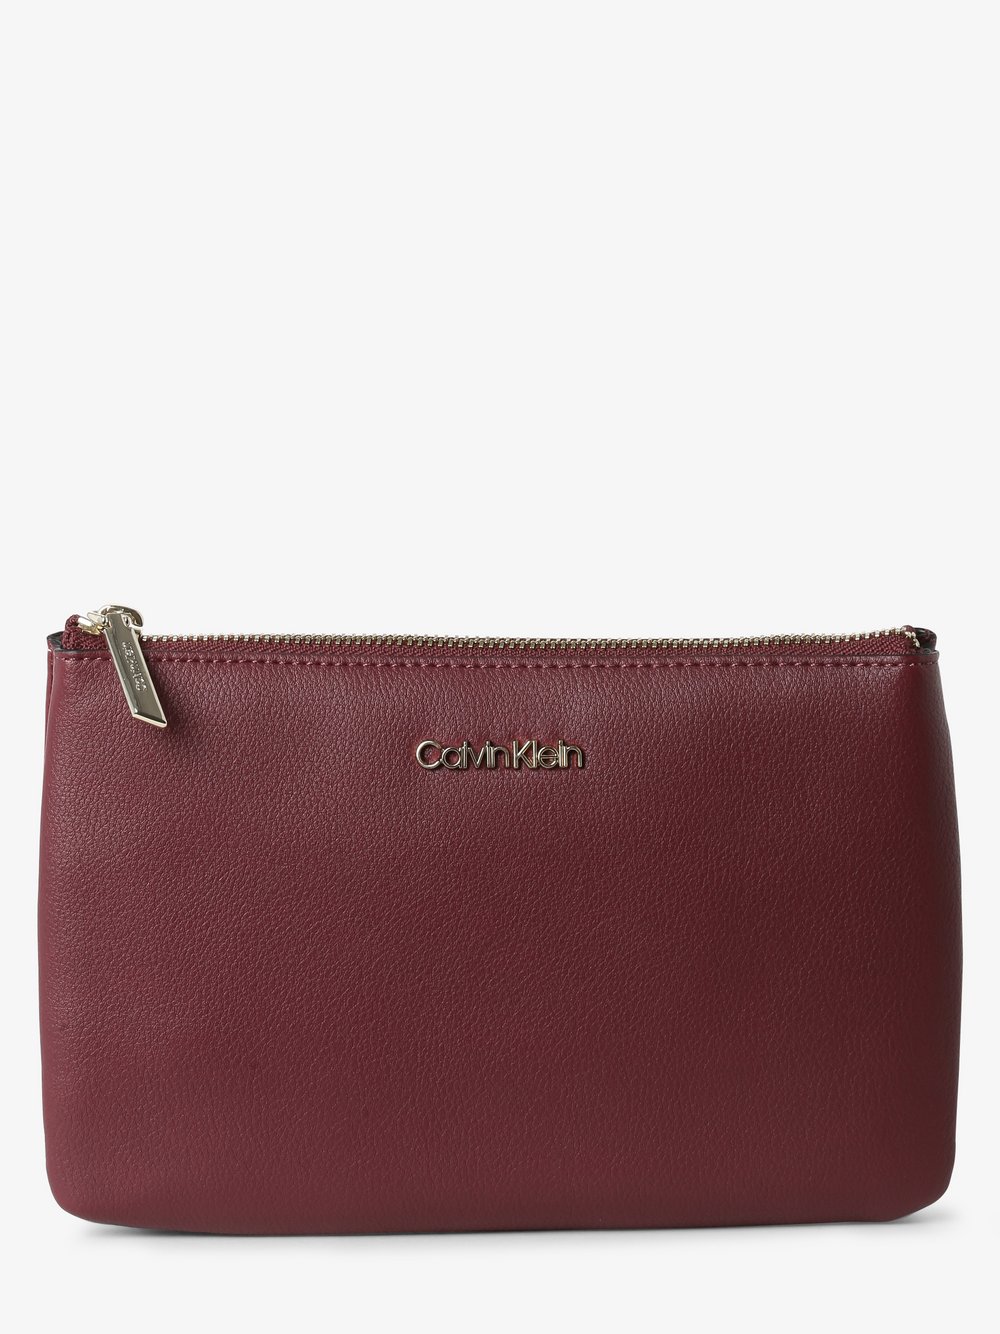 Calvin Klein - Damska torebka na ramię, czerwony